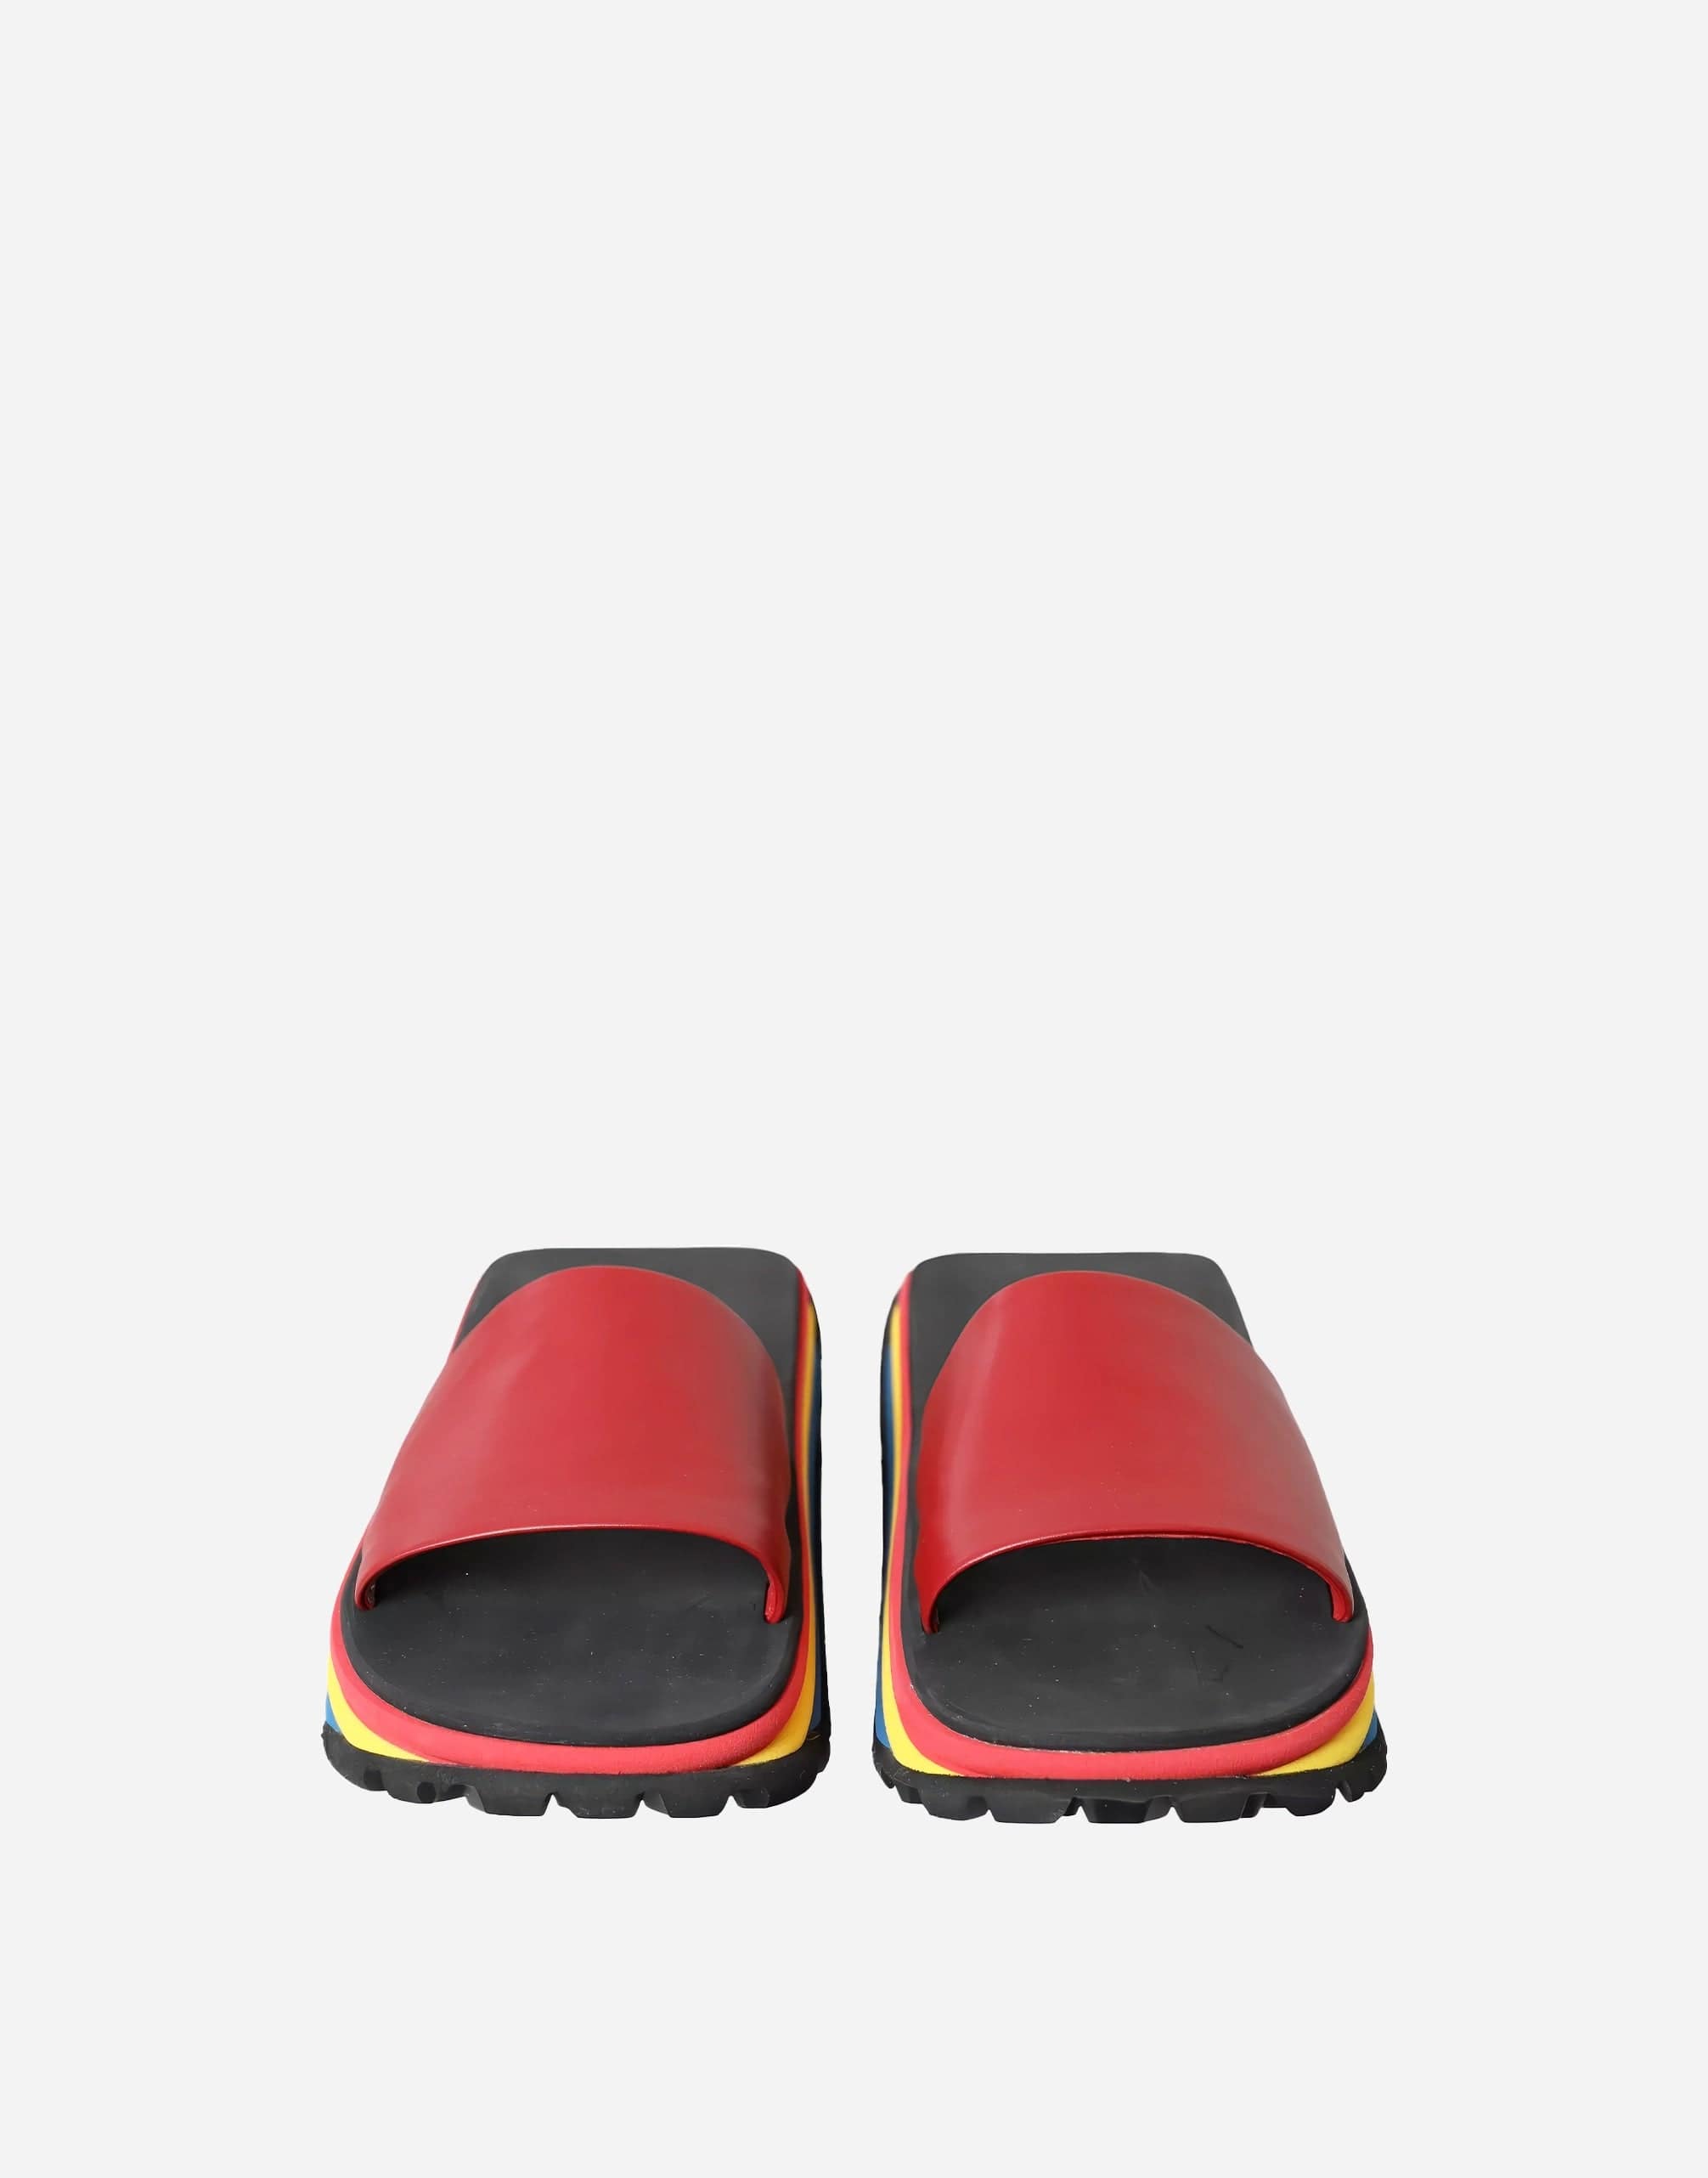 Dolce & Gabbana Multicolor Nappa DEVOTION Sandals Shoes